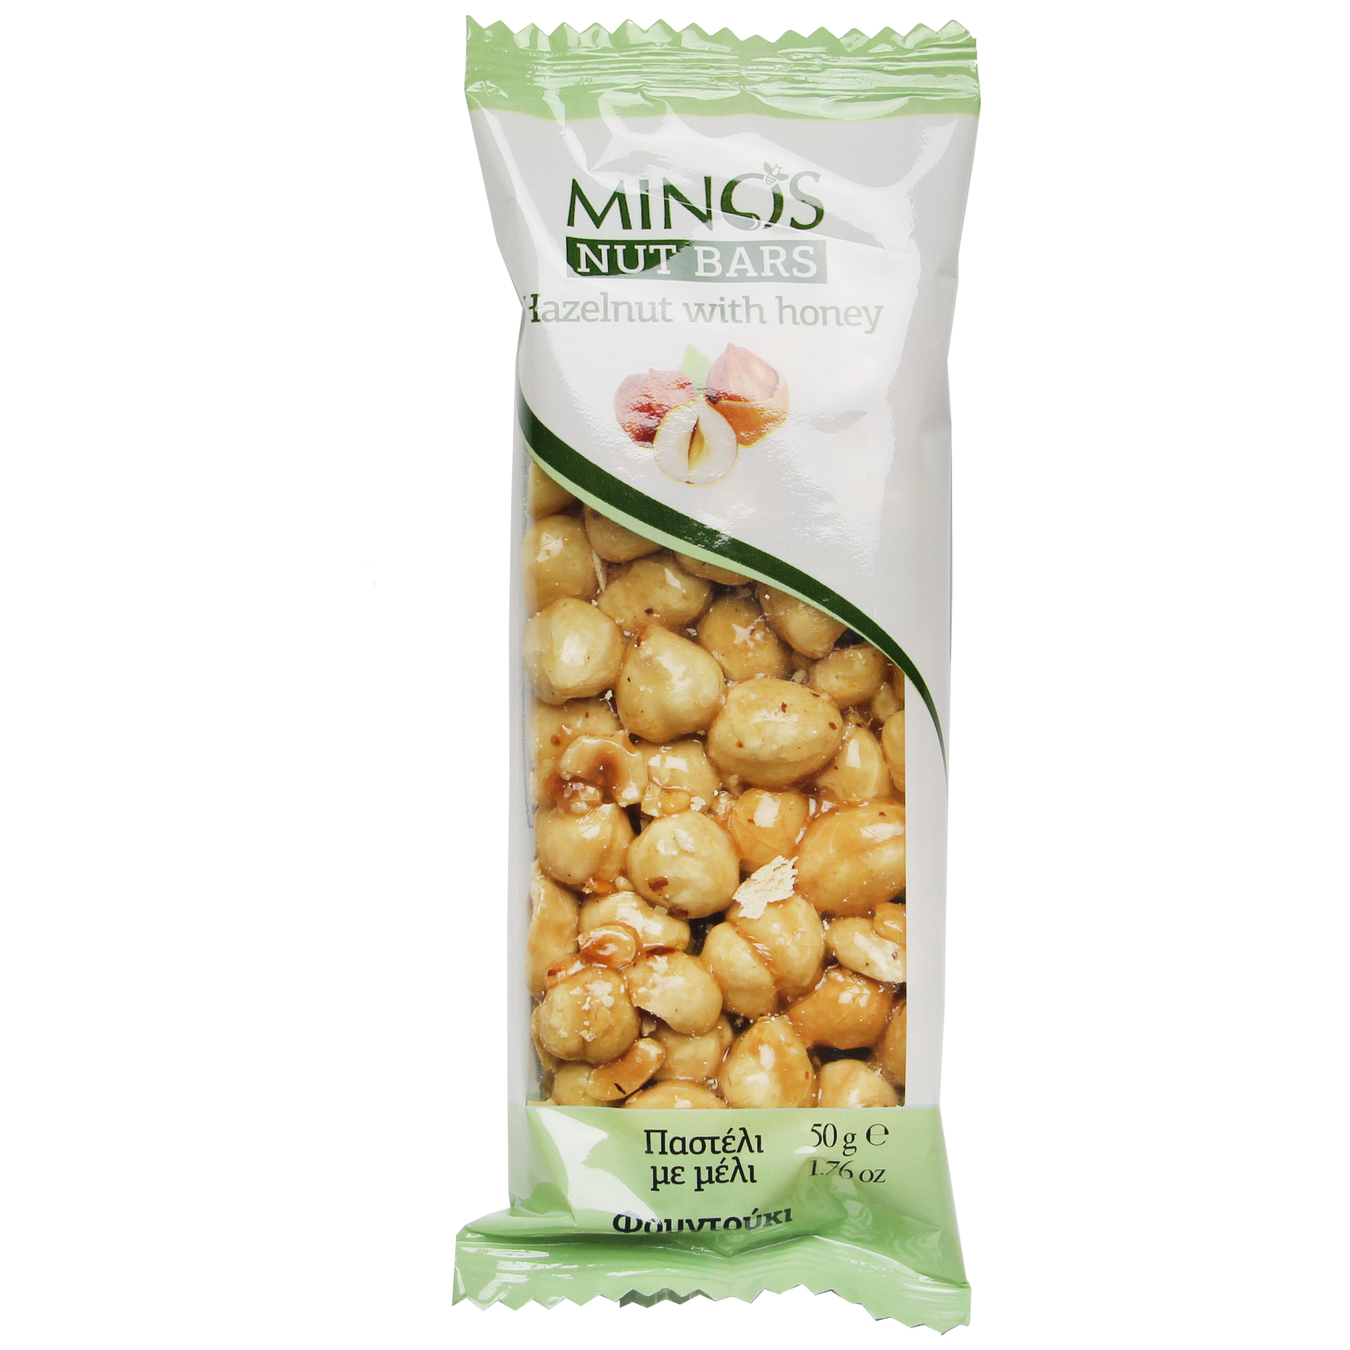 Minos With Hazelnut And Honey Nut Bar 50g